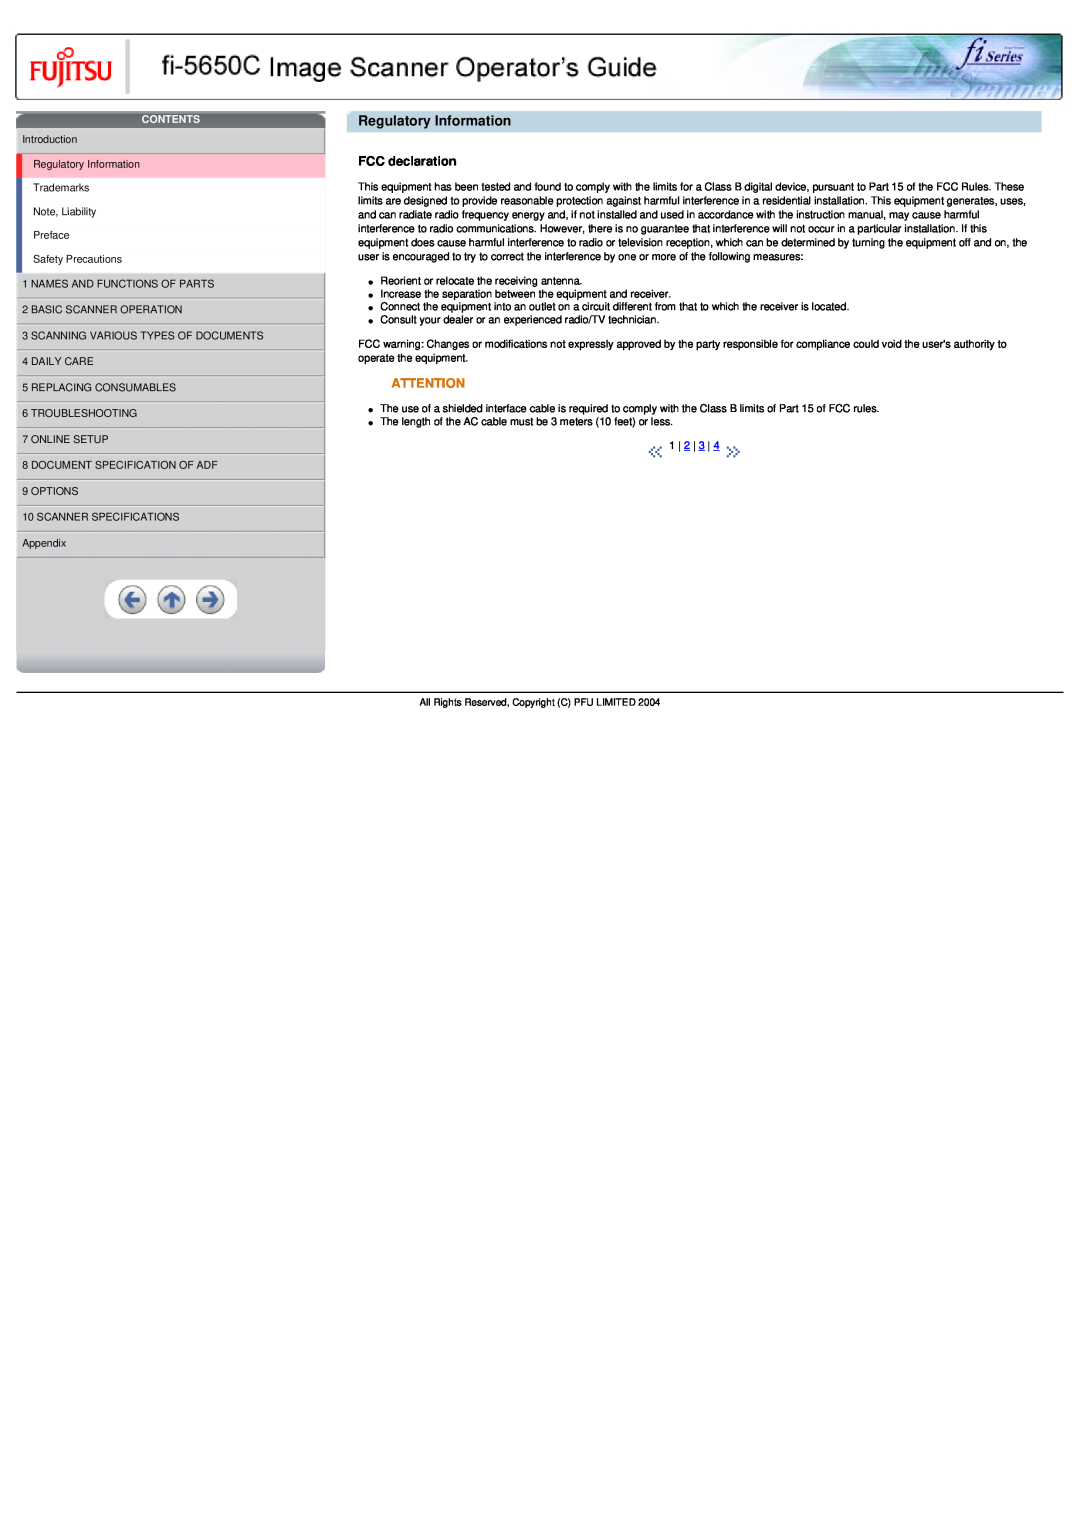 Fujitsu fi-5650C specifications Regulatory Information, FCC declaration, Contents 